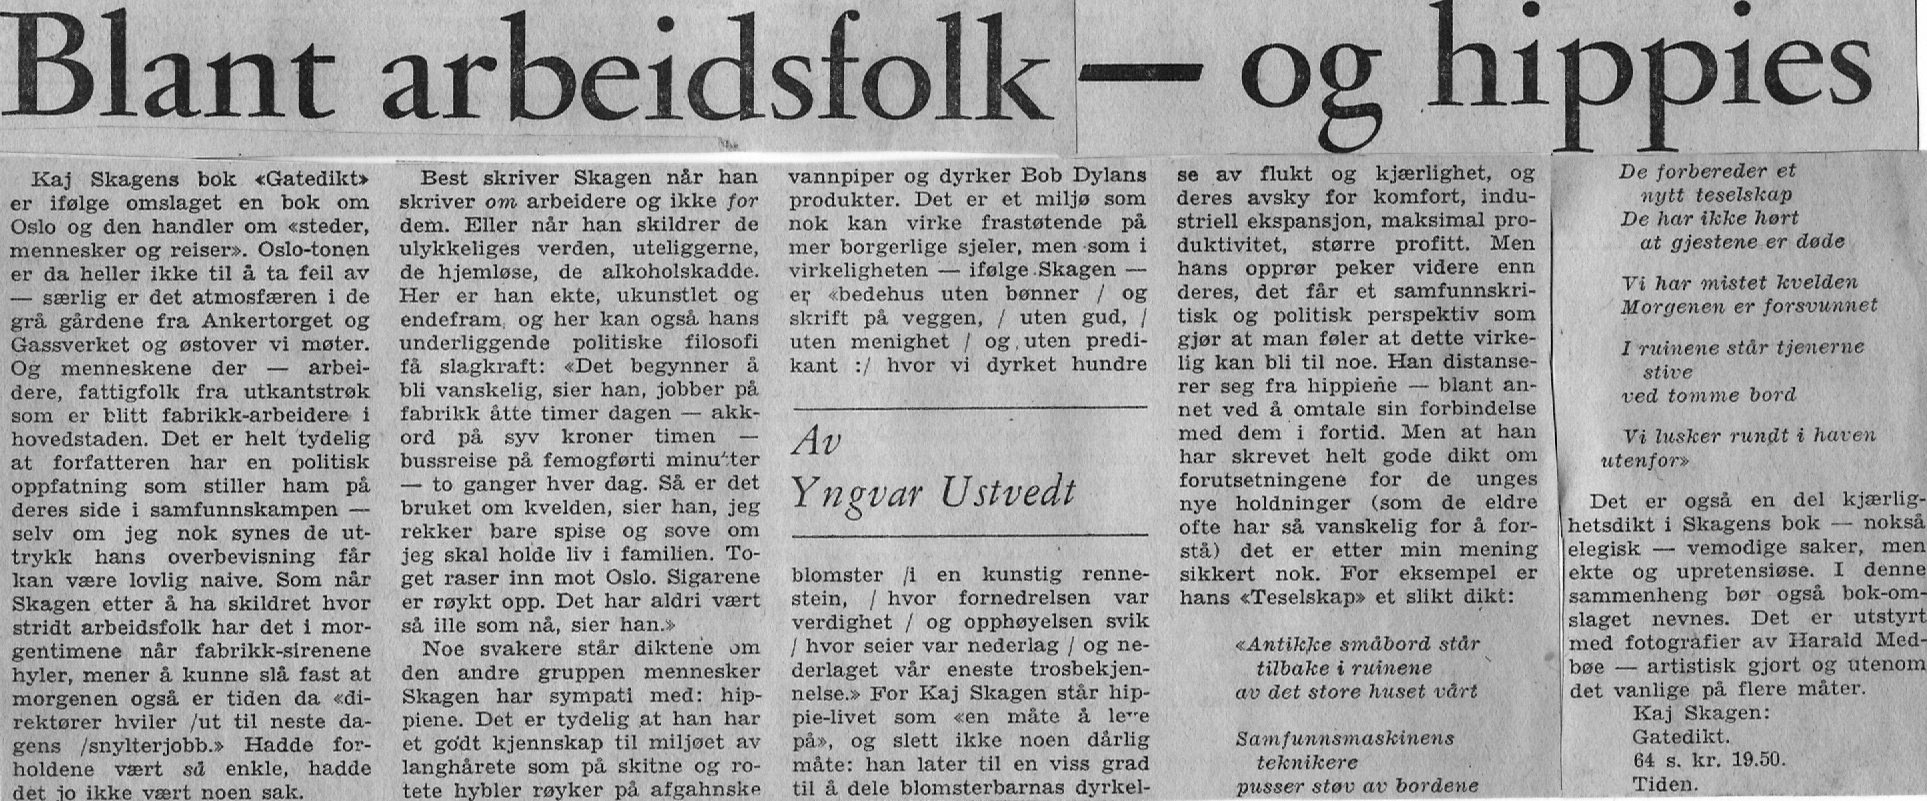 Utklipp fra Dagbladet 1971